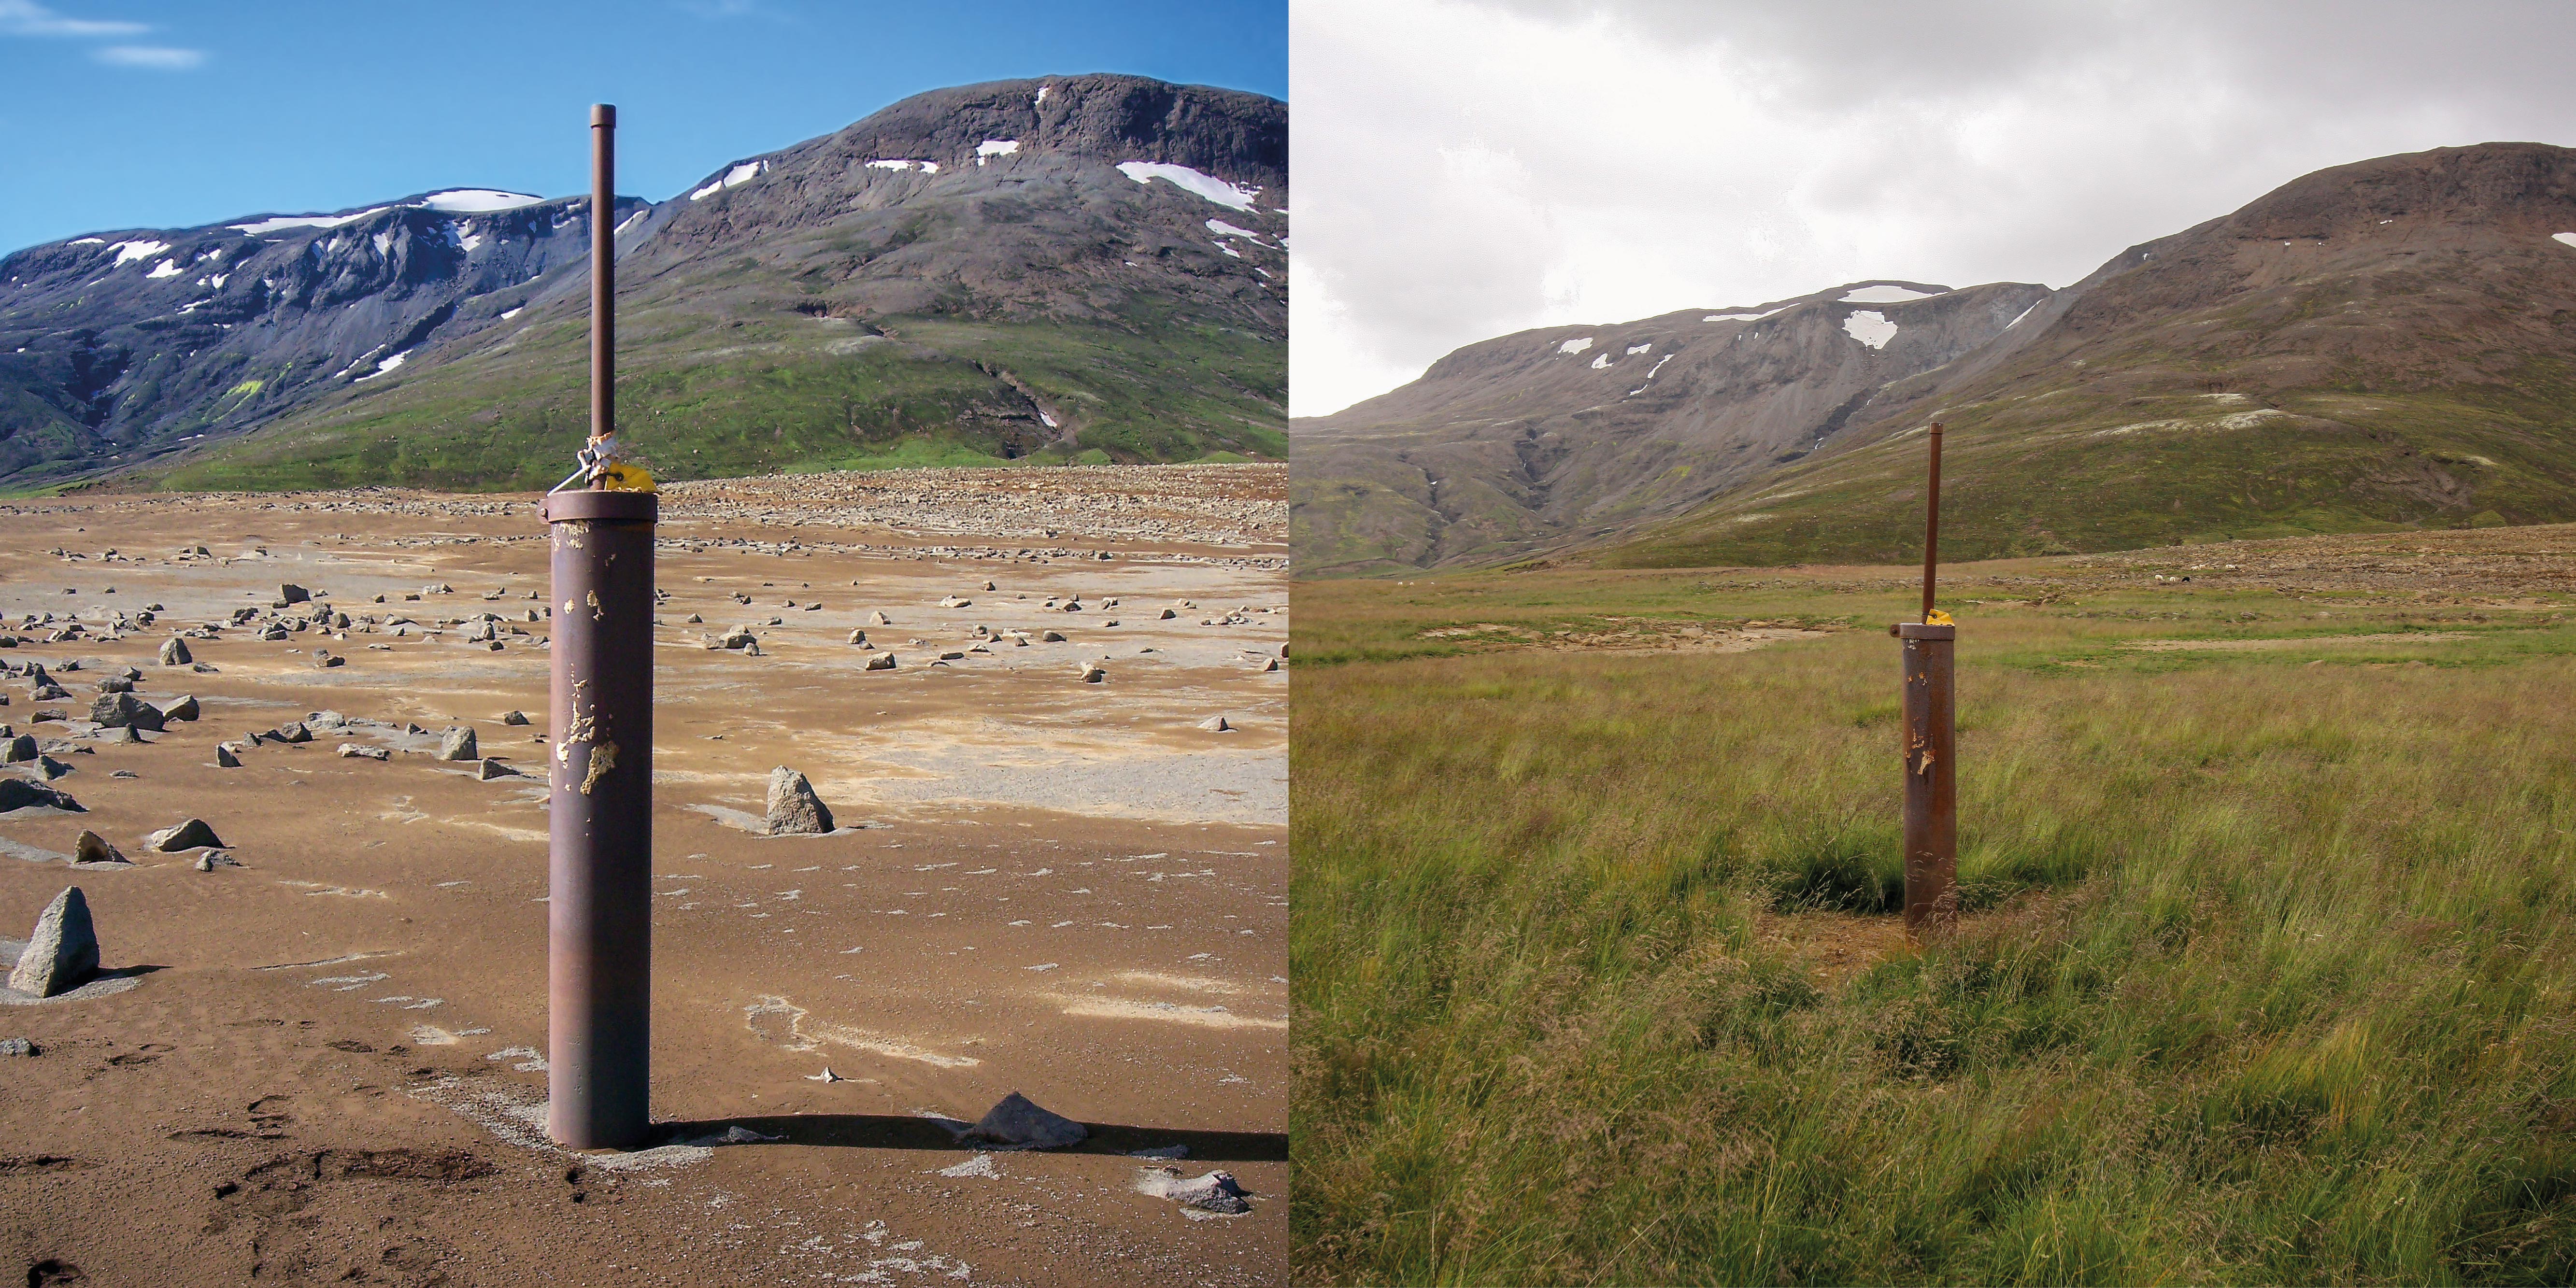 Land Reform Fund site before and after operations. Photo: Landbótasjóður